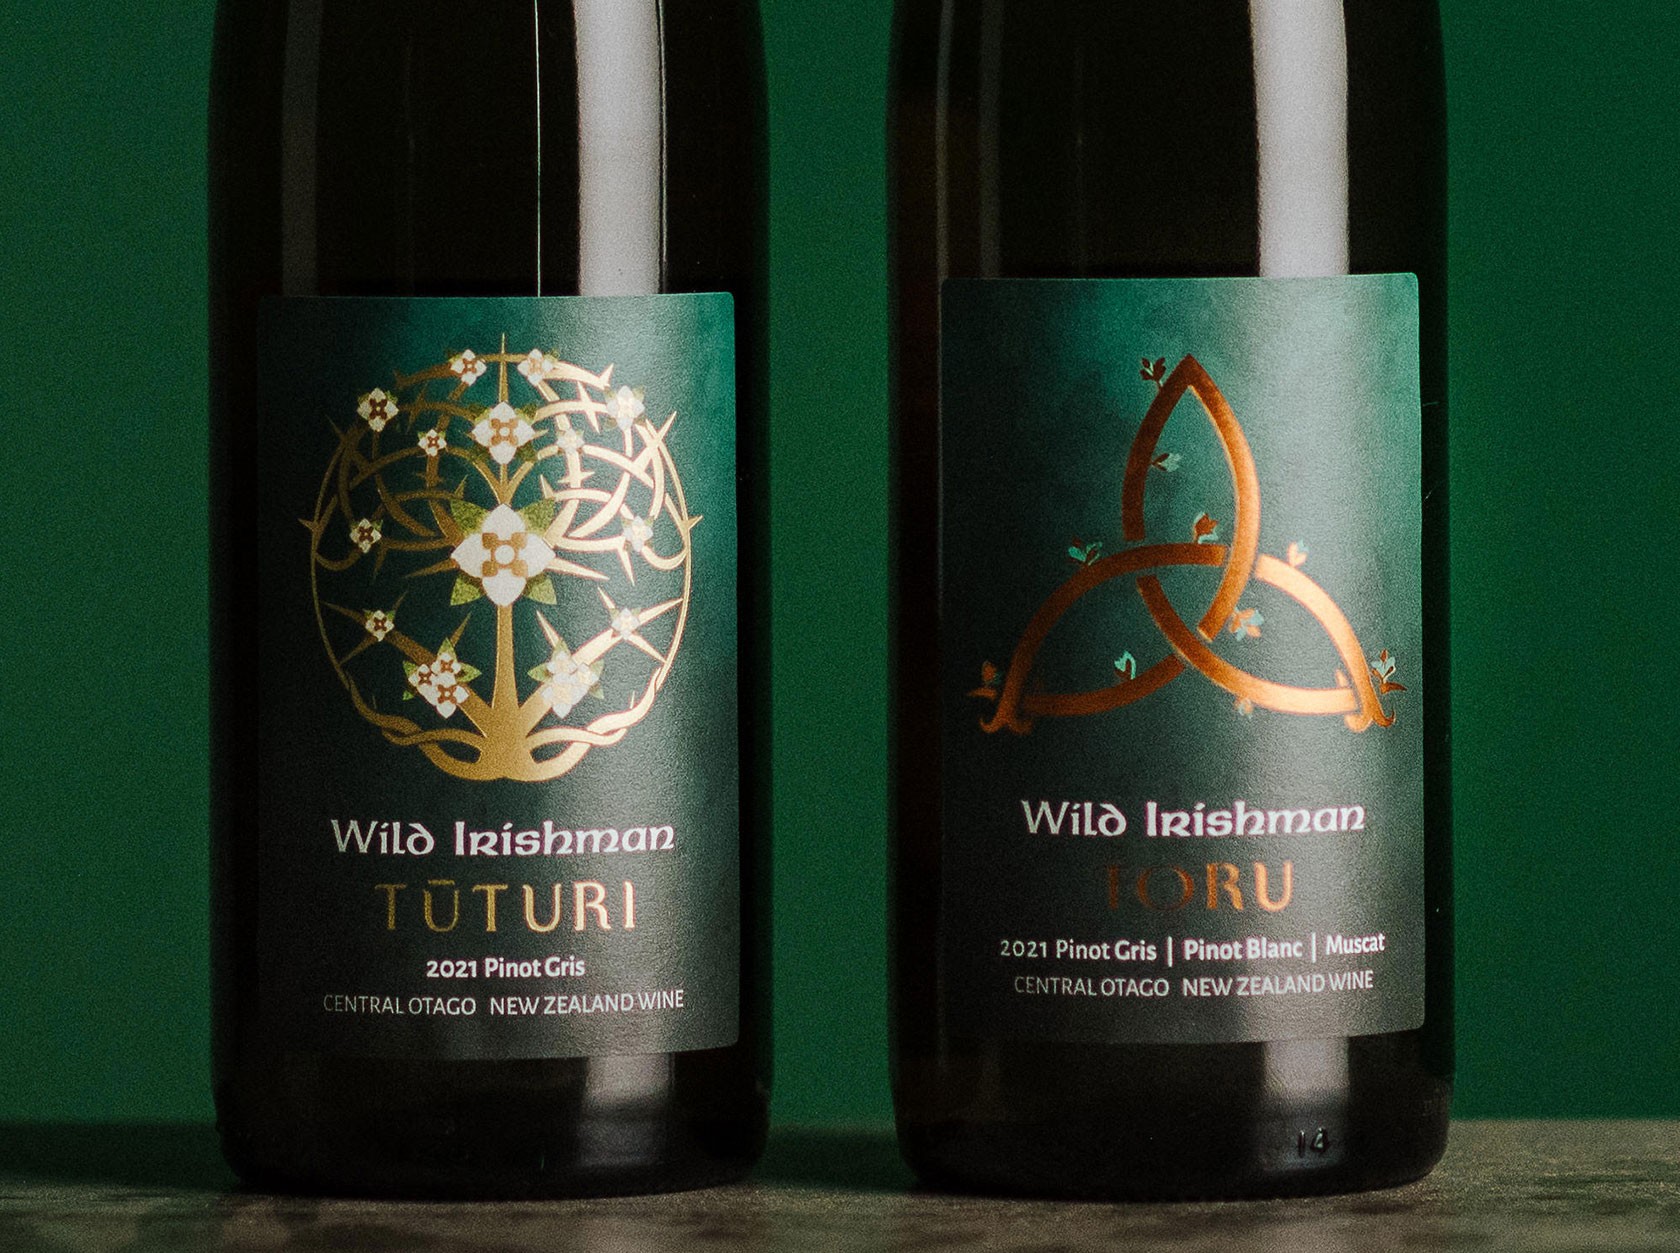 Wild Irishman wine labels